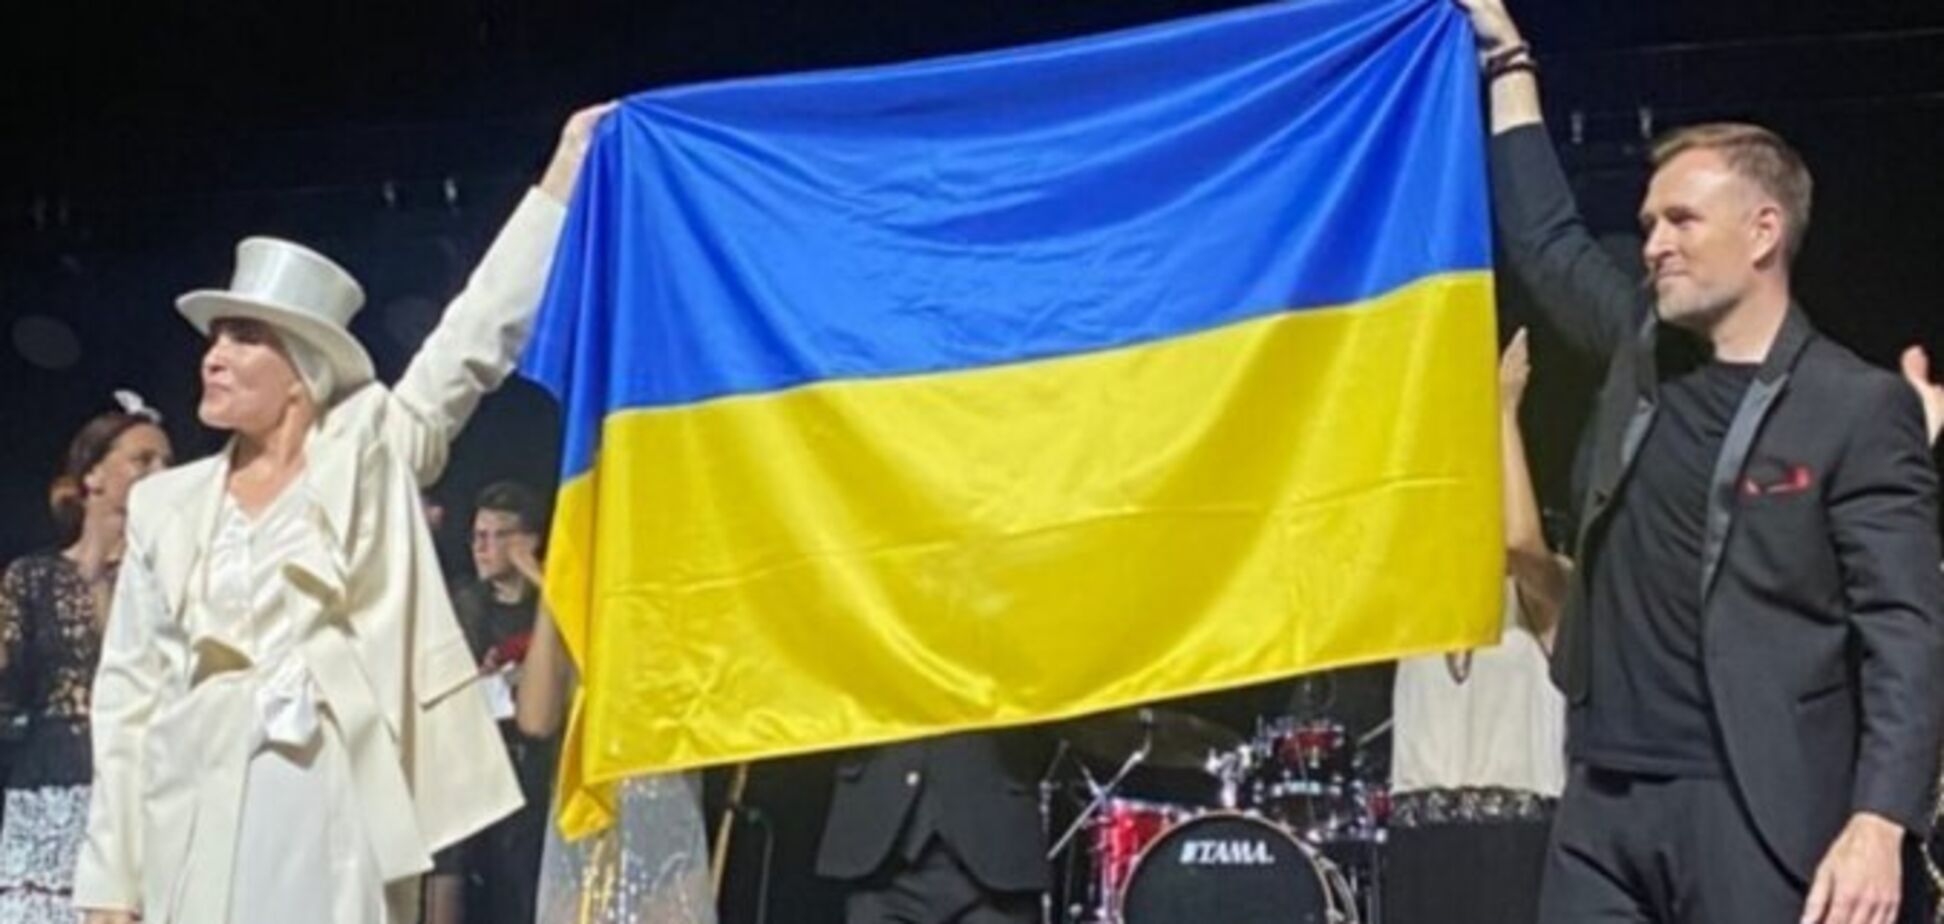 Лайма Вайкуле открыто поддержала Украину: певица вышла на сцену с сине-желтым флагом